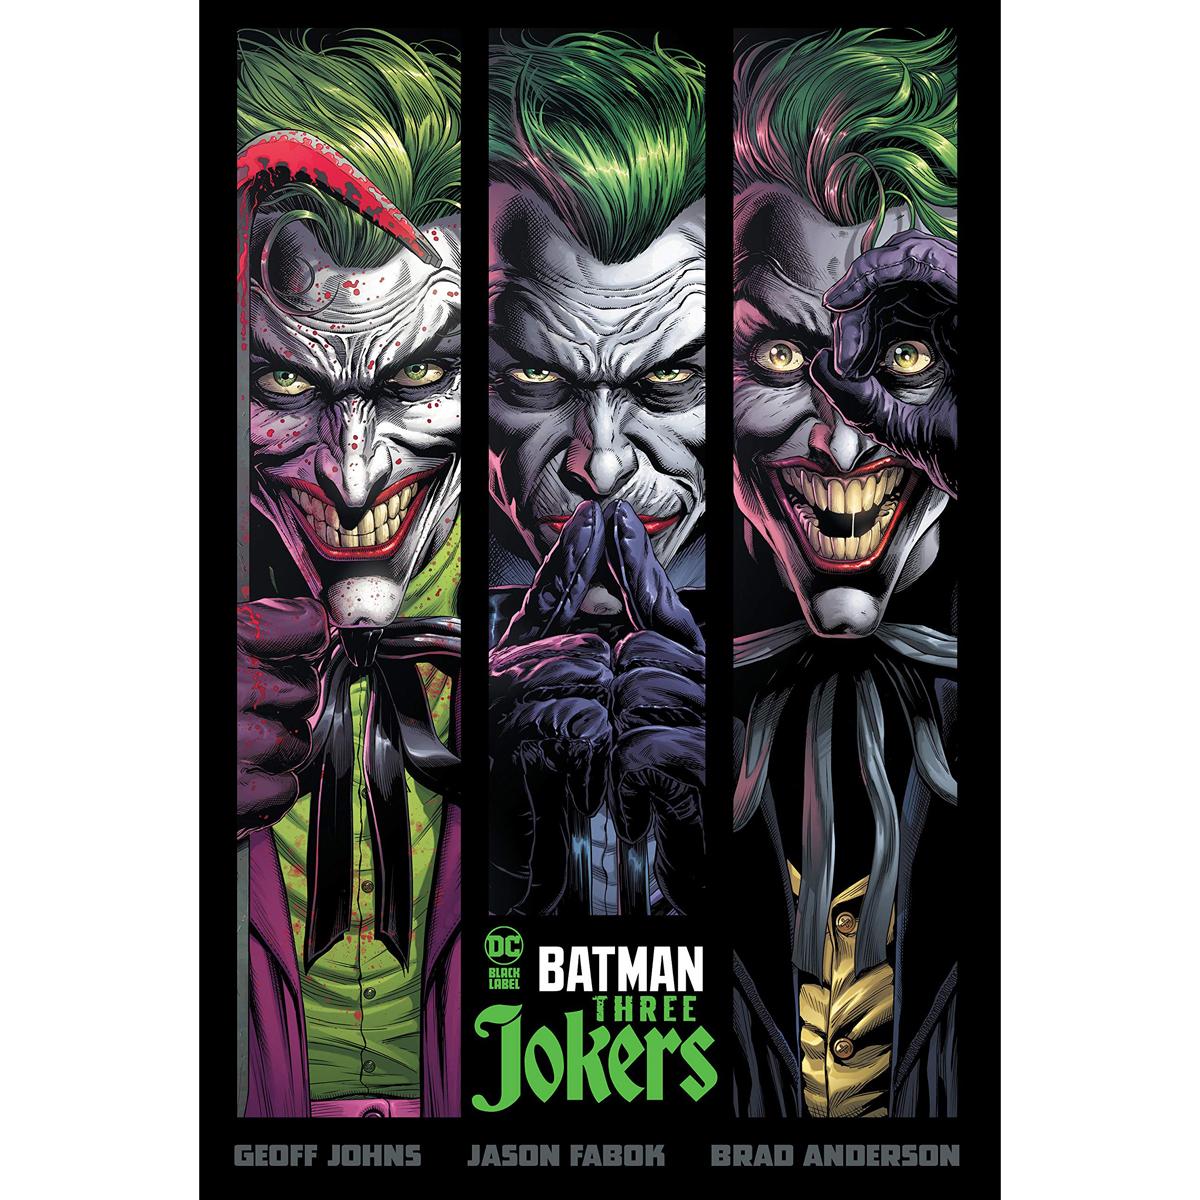 Batman Three Jokers Hardcover Book for $15.71